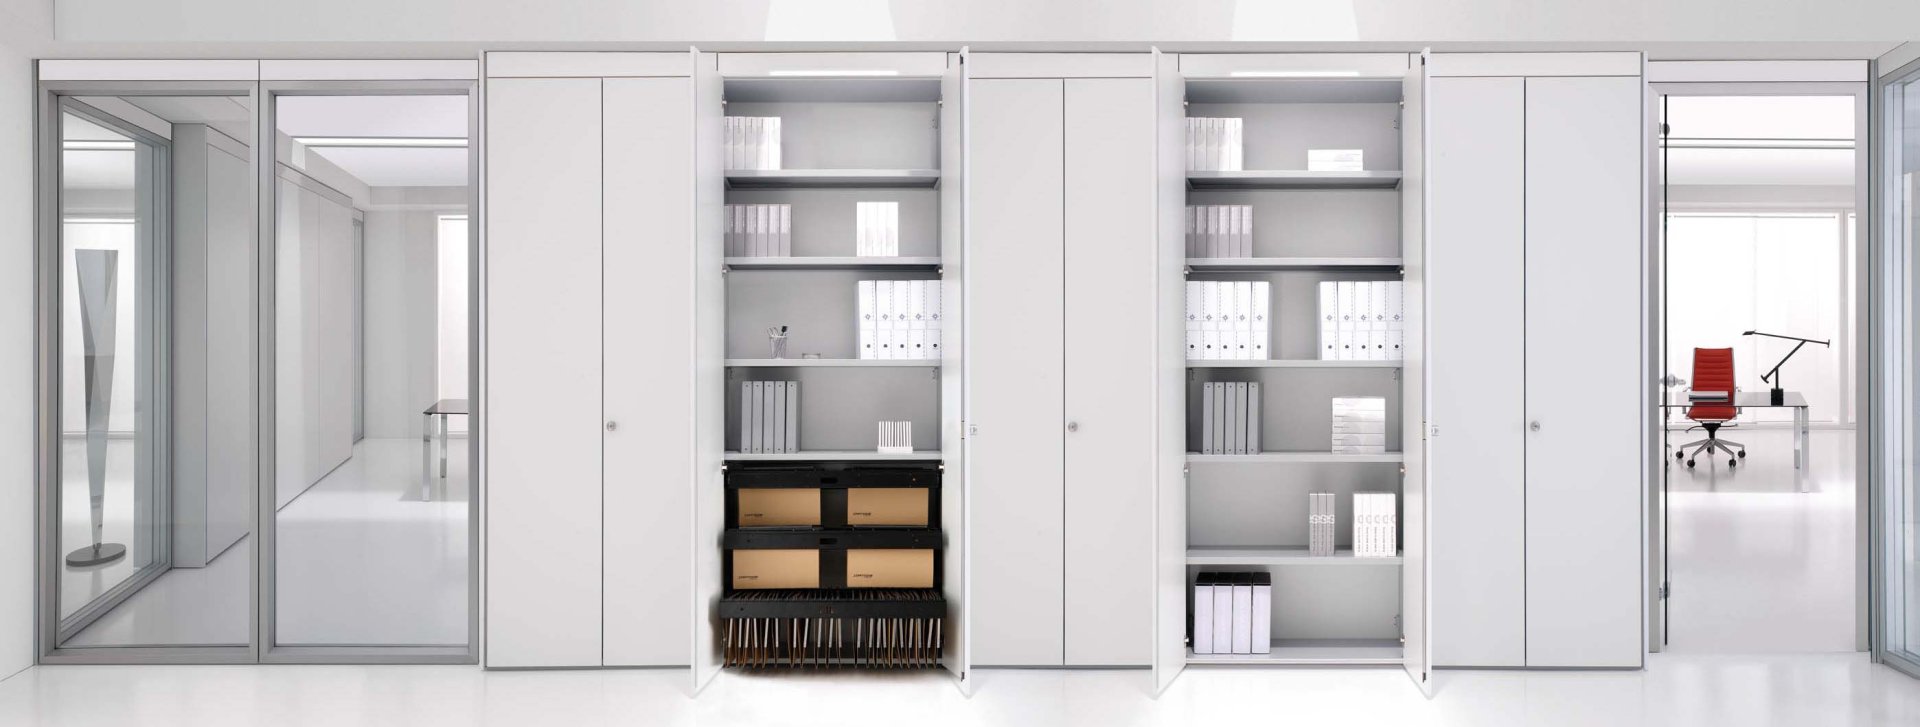 vault-storage-partition-shelves-detail-01.jpg